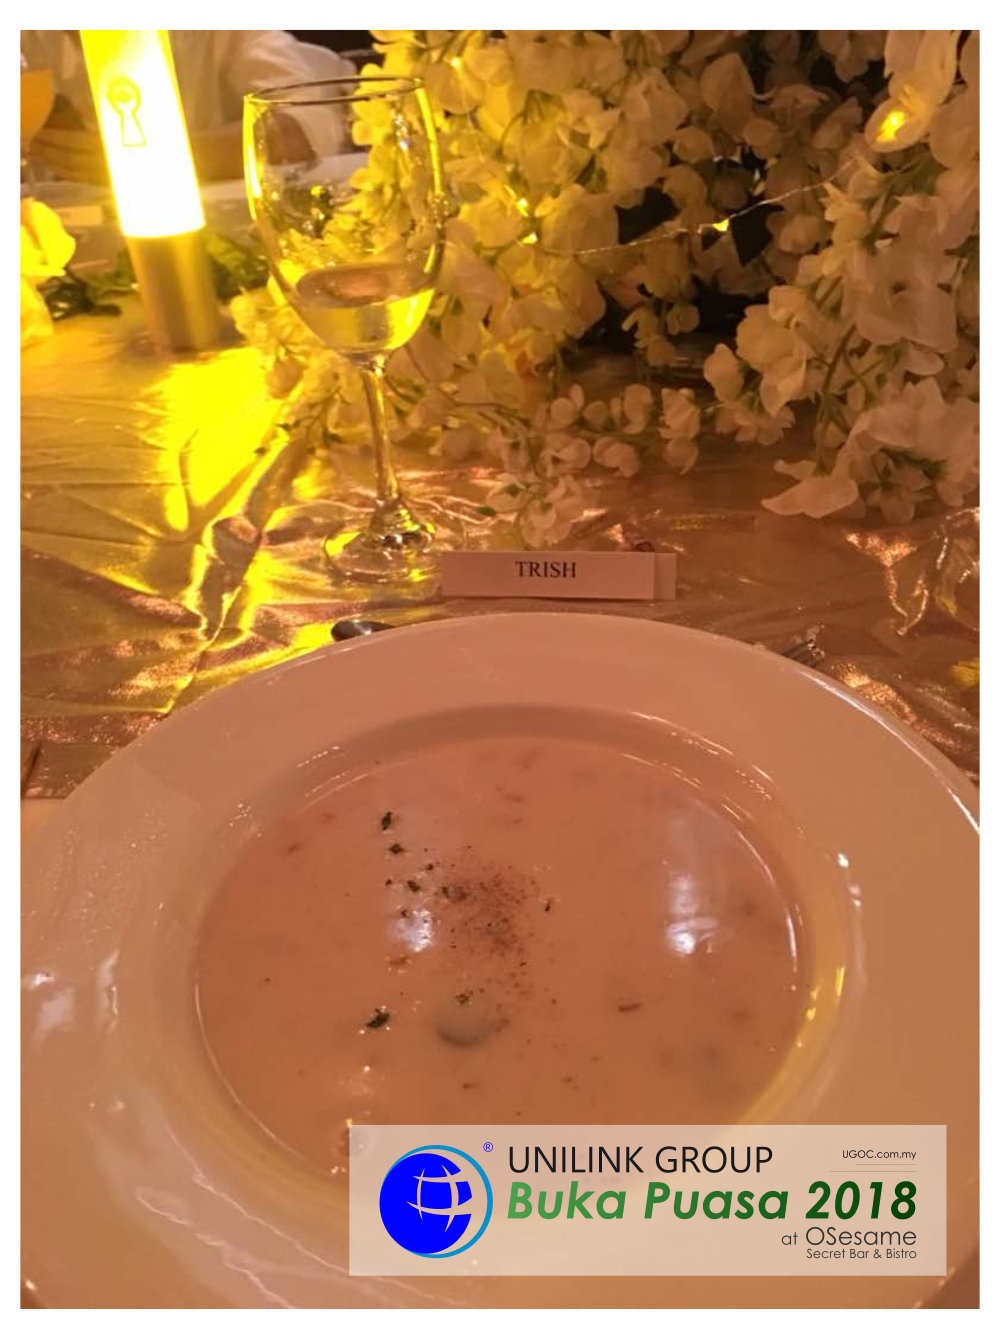 Unilink Group Buka Puasa Dinner 2018 Selamat Hari Raya Aidilfitri from Agensi Pekerjaan Unilink Prospects Sdn Bhd at Osesame Secret Bar and Bistro 49